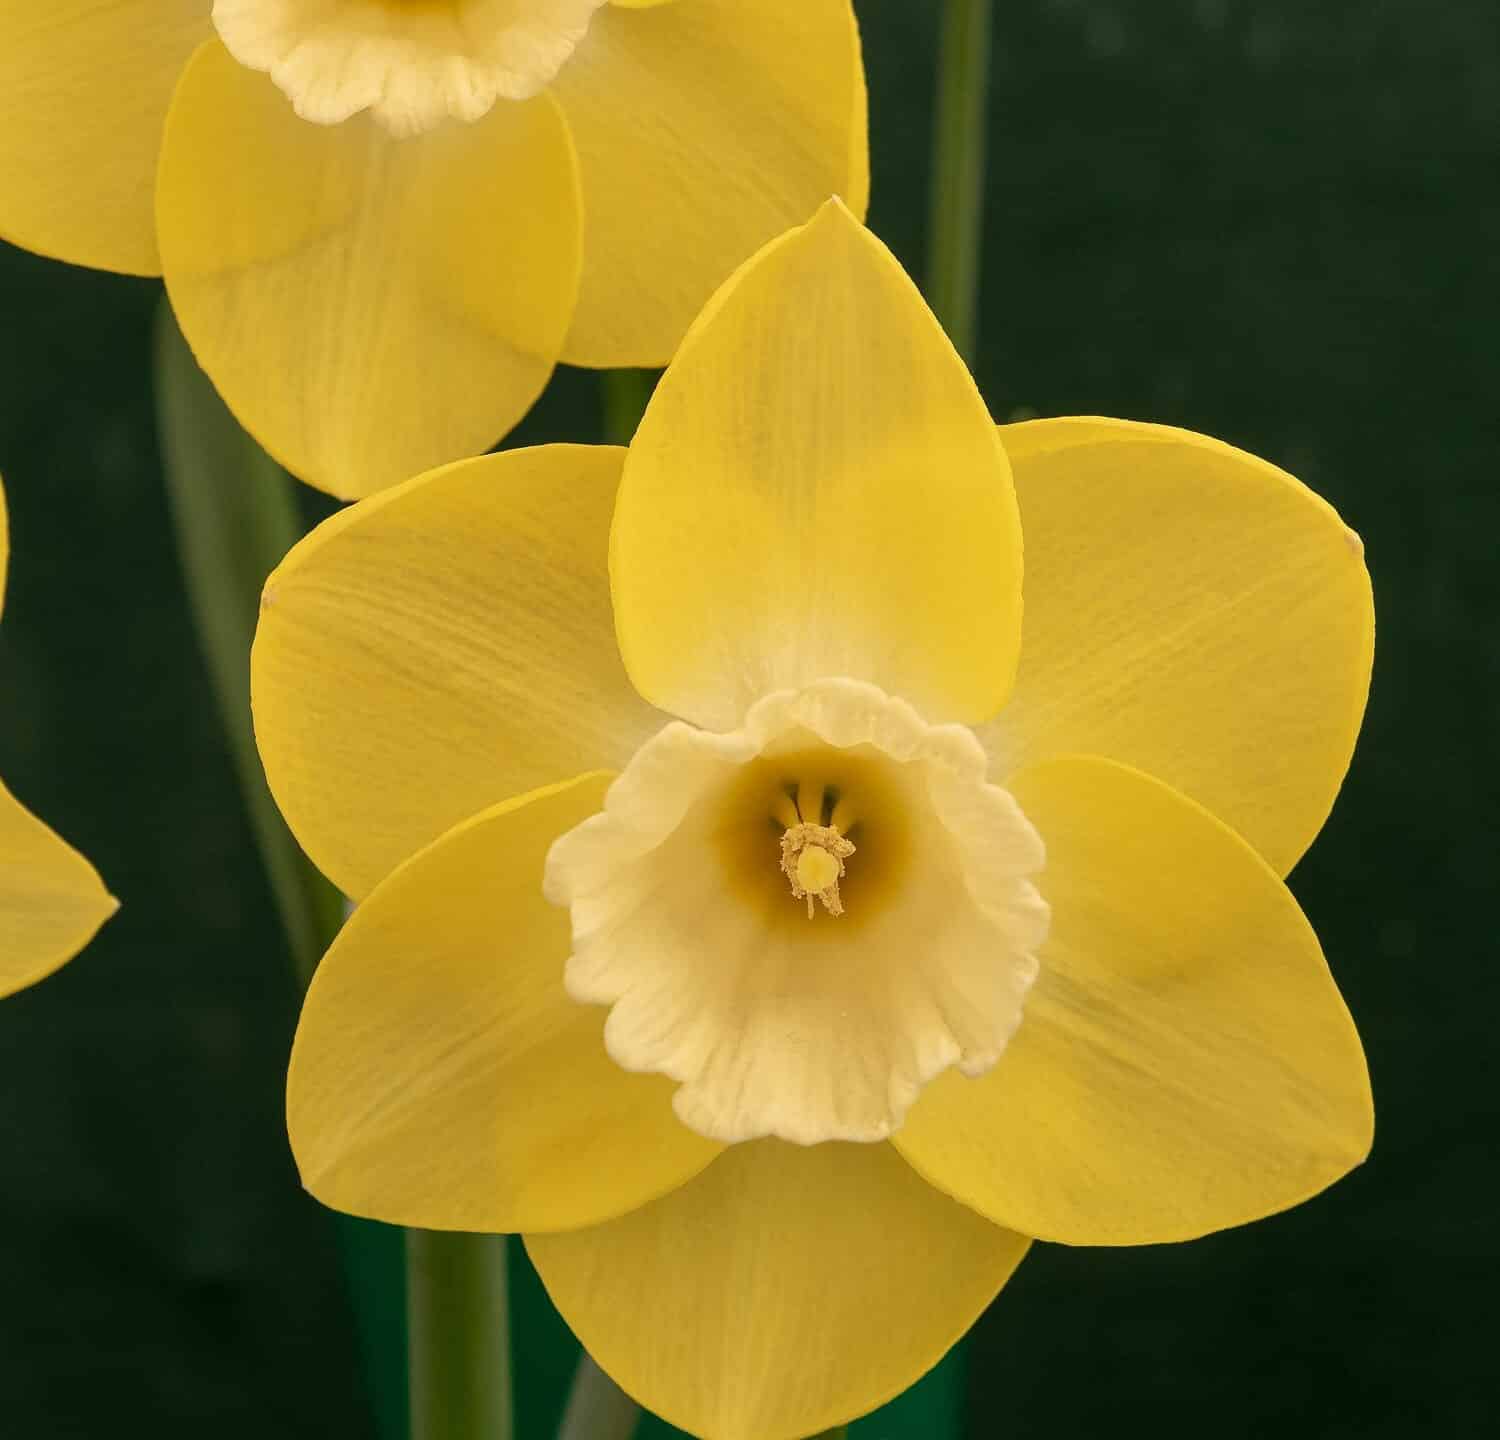 Yellow flowering daffodil Narcissus Flor D'Luna seen closeup indoors.